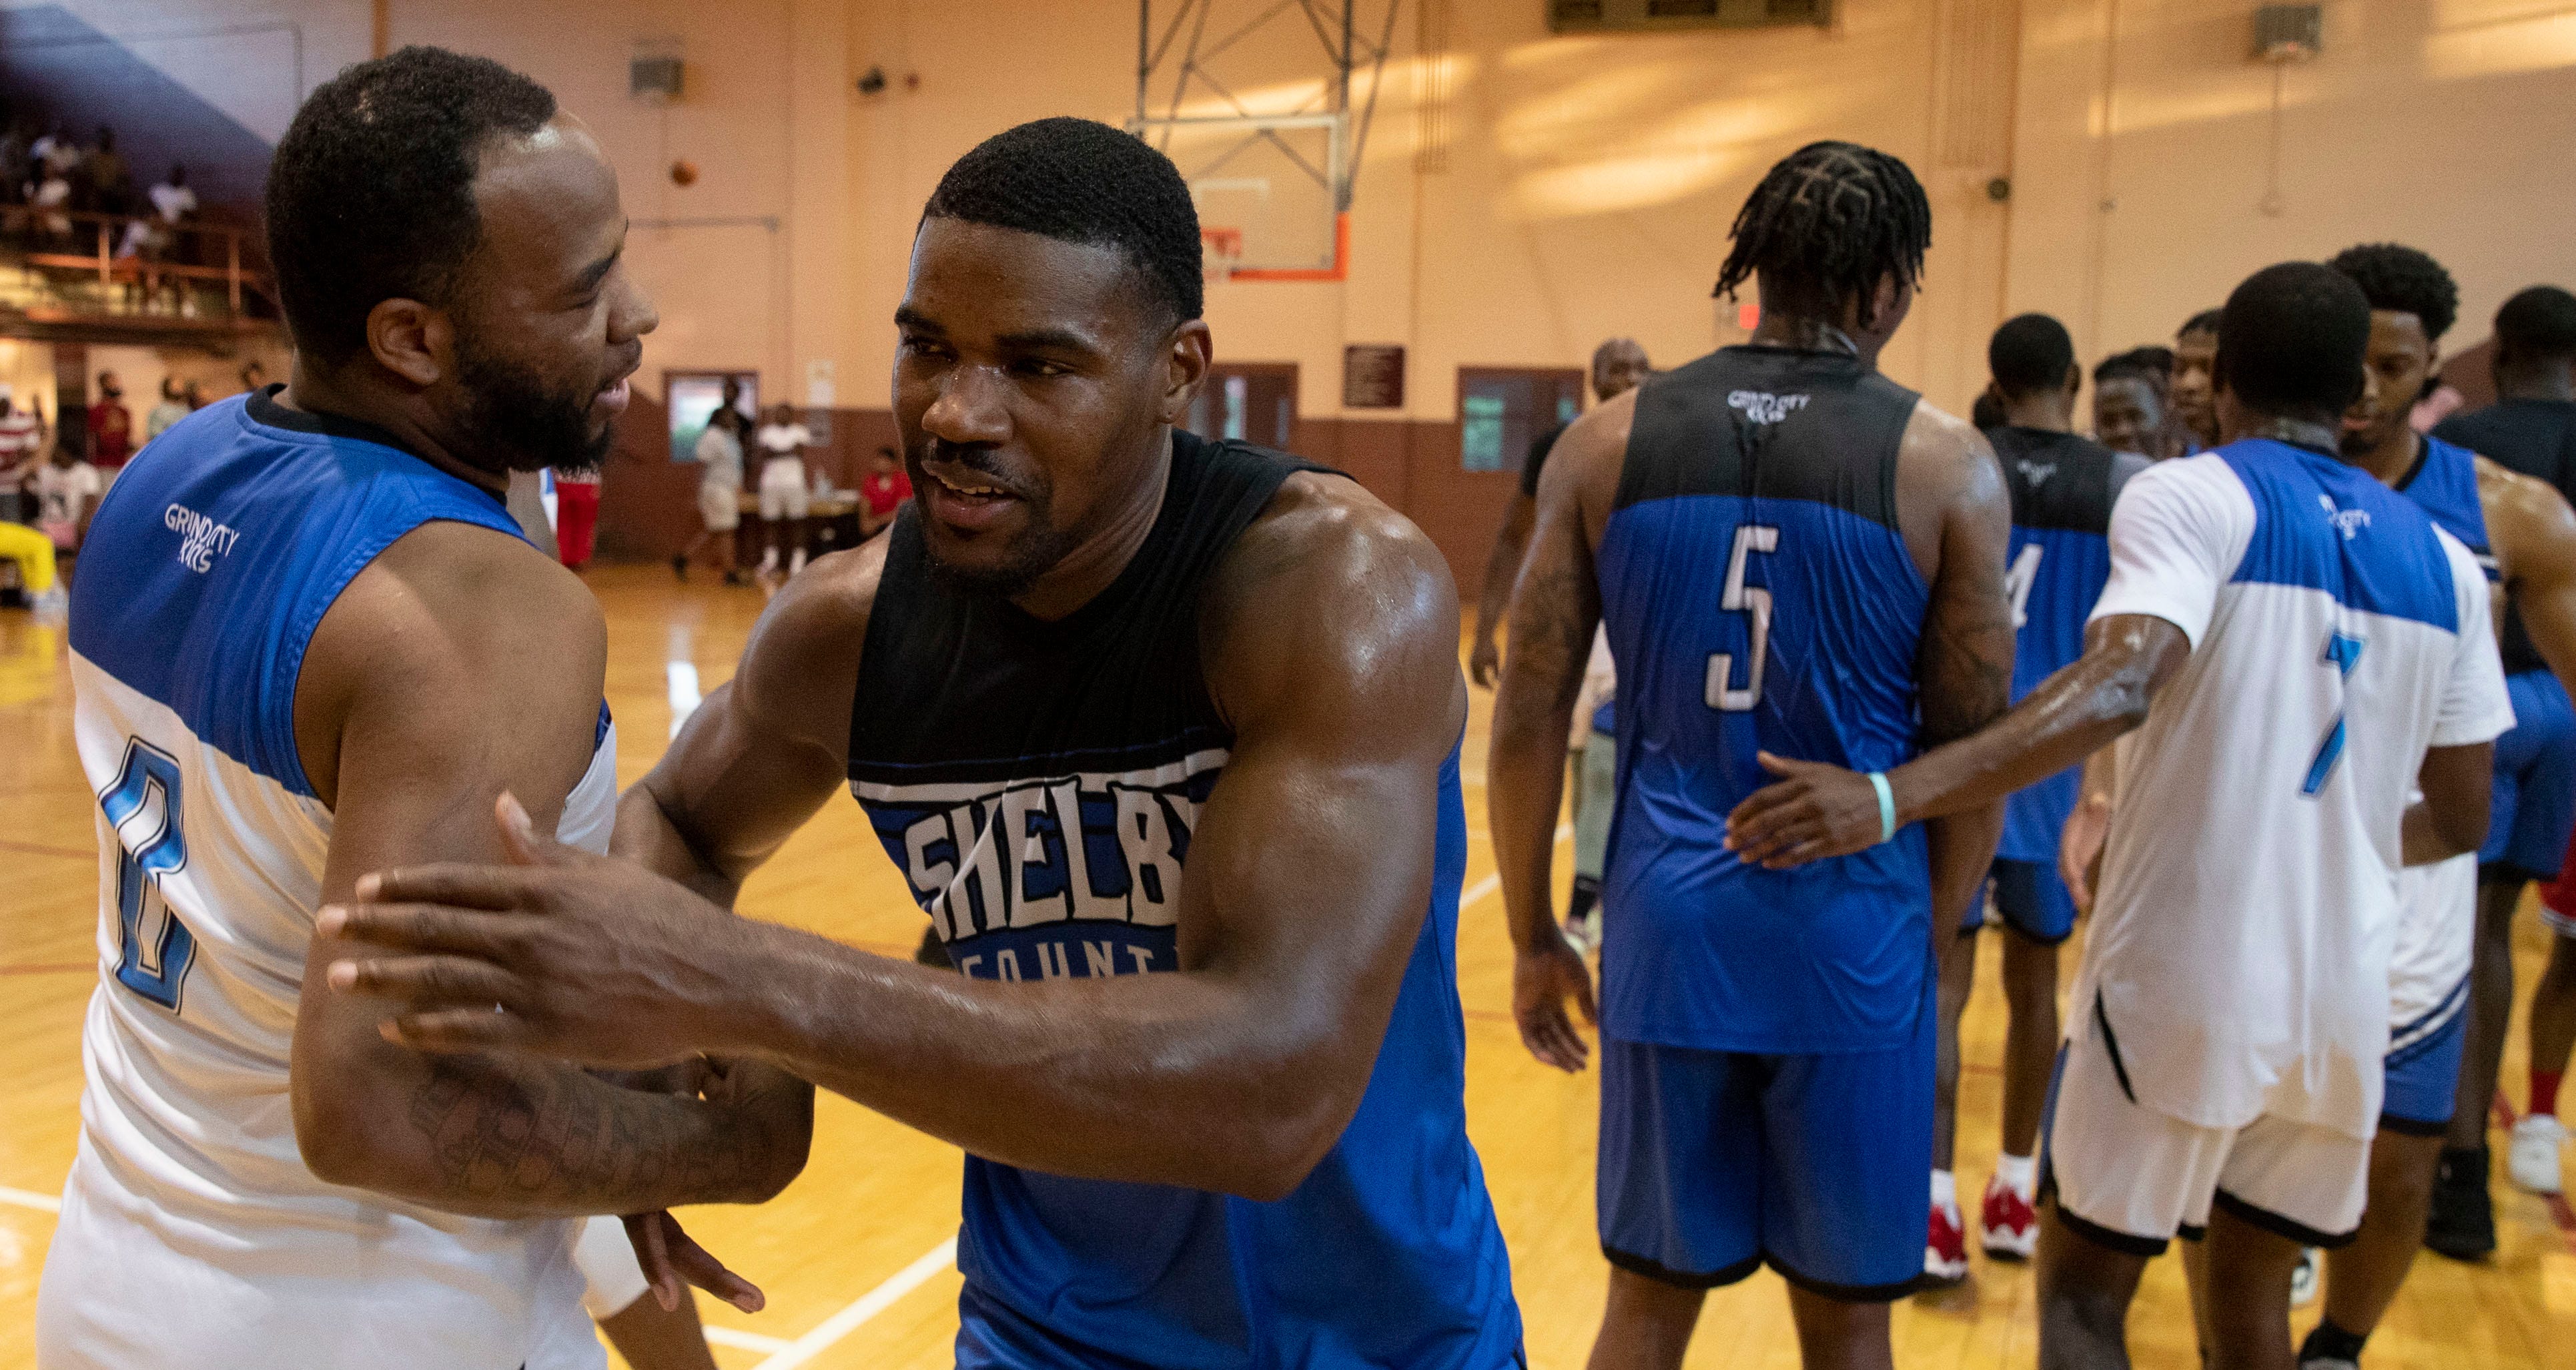 Memphis basketball ProAm is showcasing the best basketball players